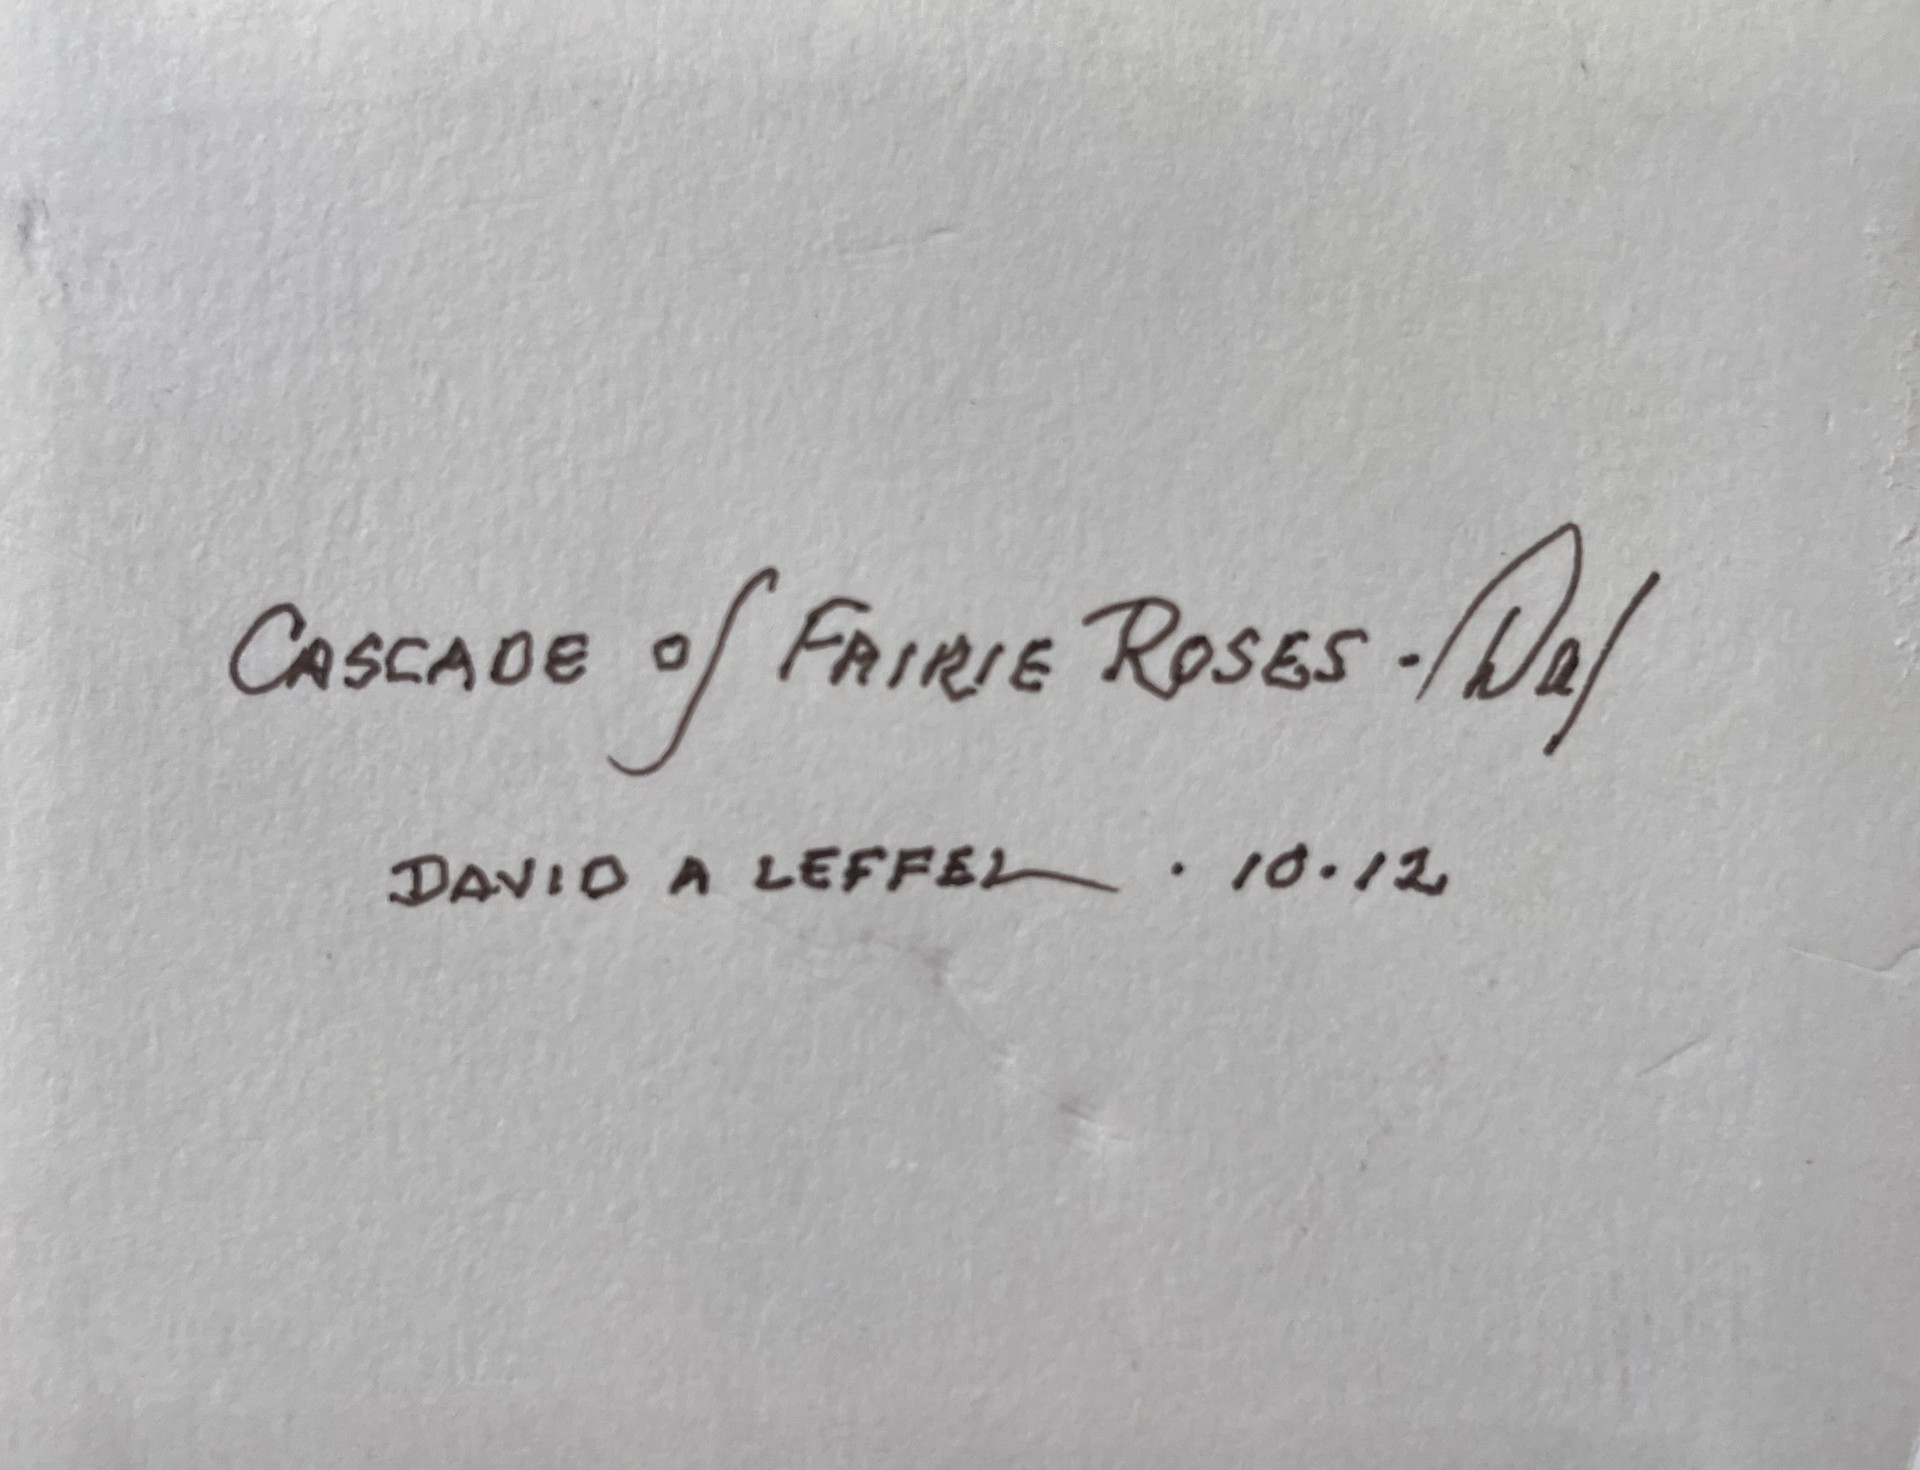 Cascade of Fairie Roses by David Leffel